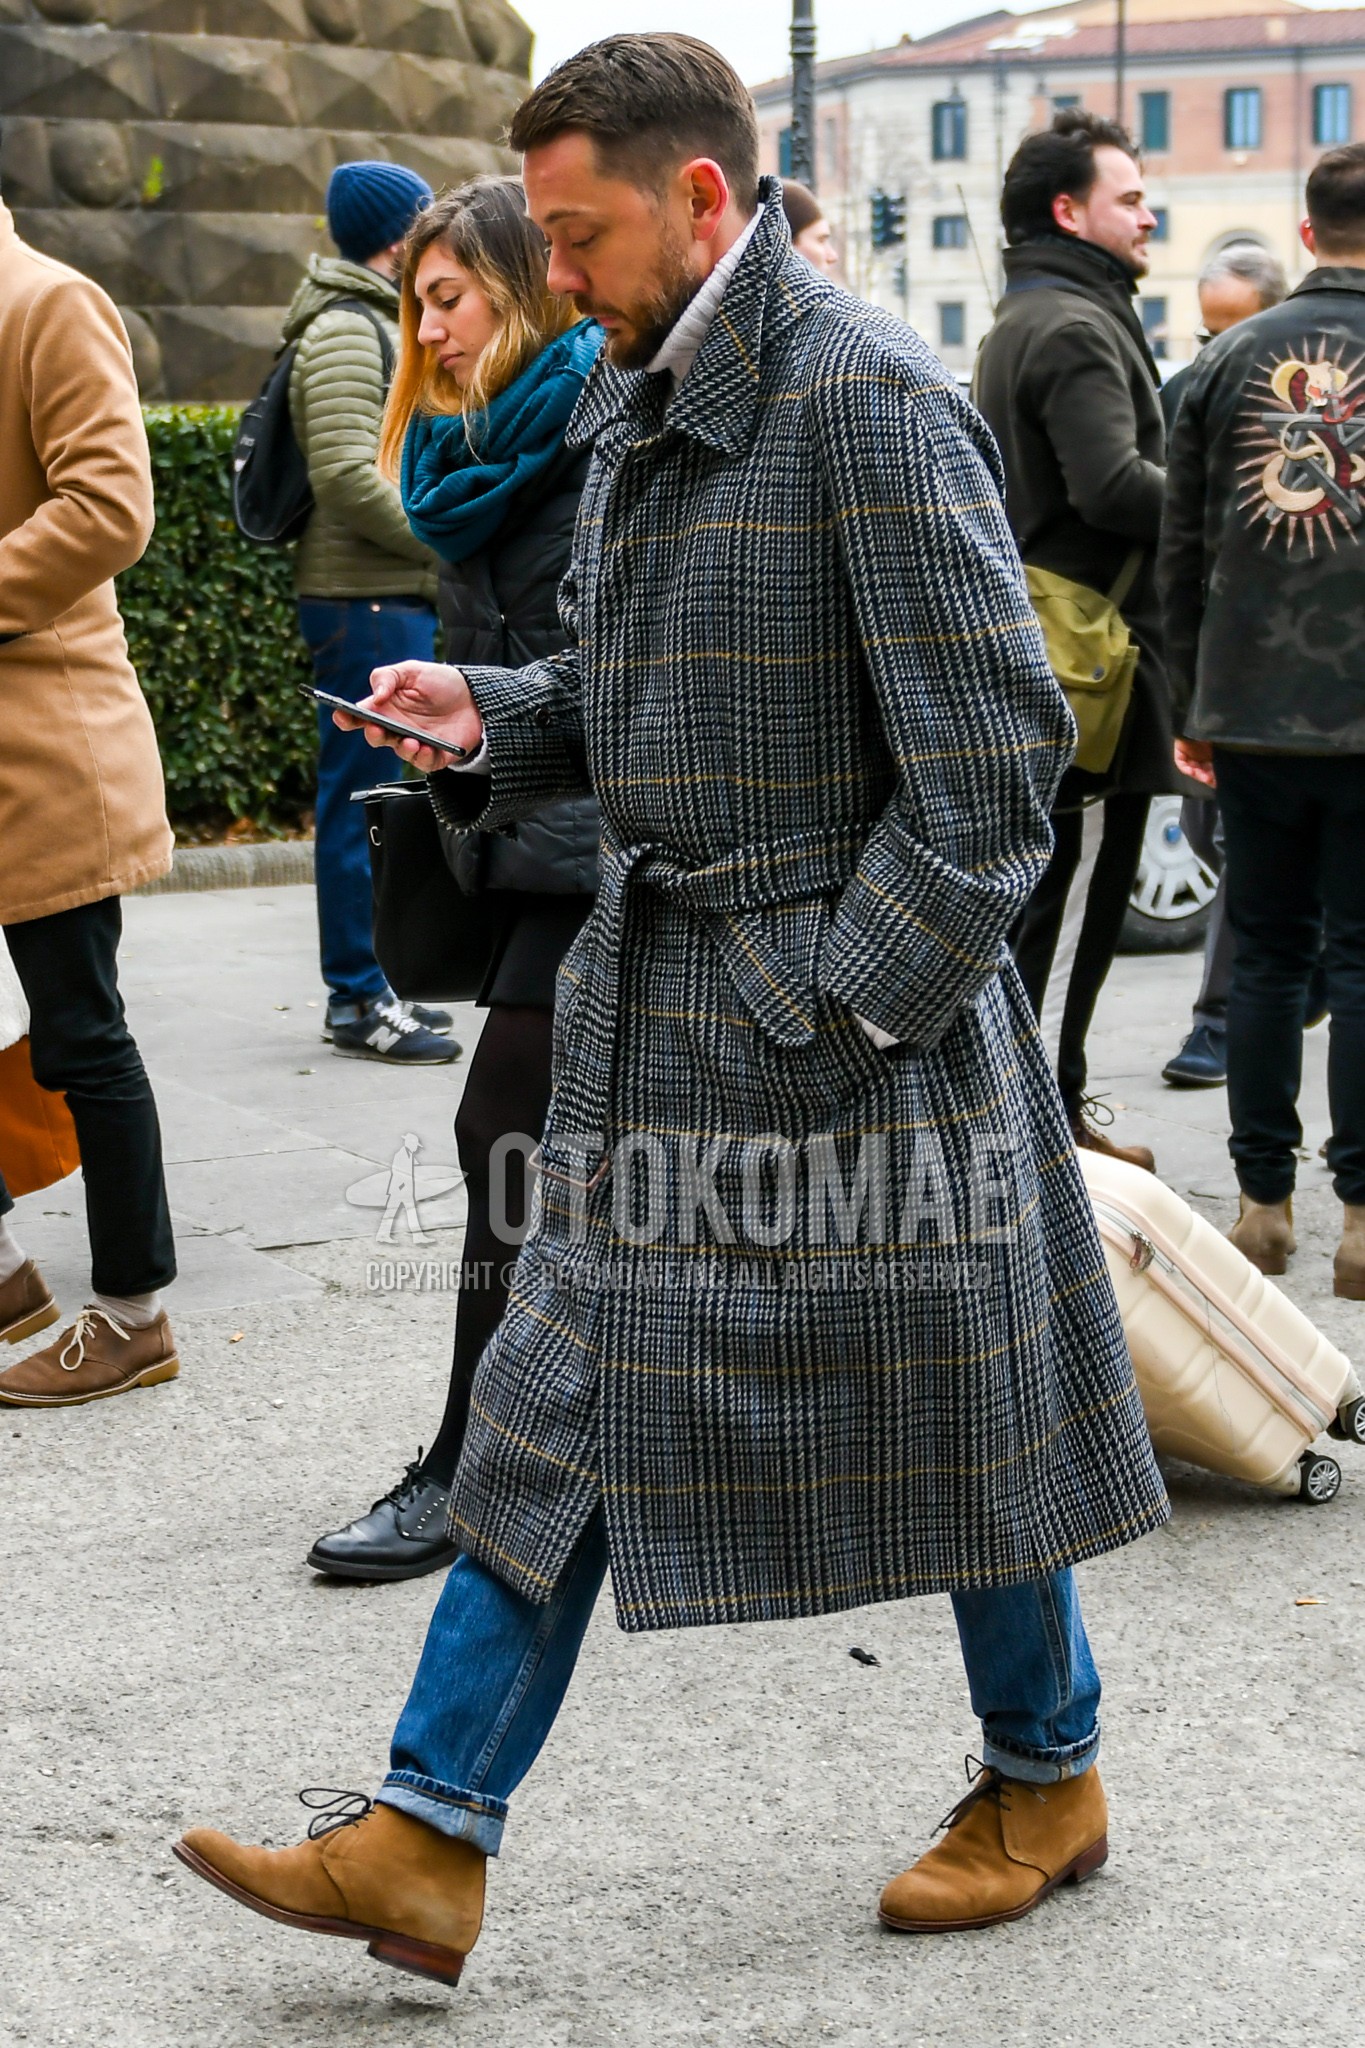 Men's autumn winter outfit with gray check belted coat, white plain turtleneck knit, blue plain denim/jeans, beige chukka boots.